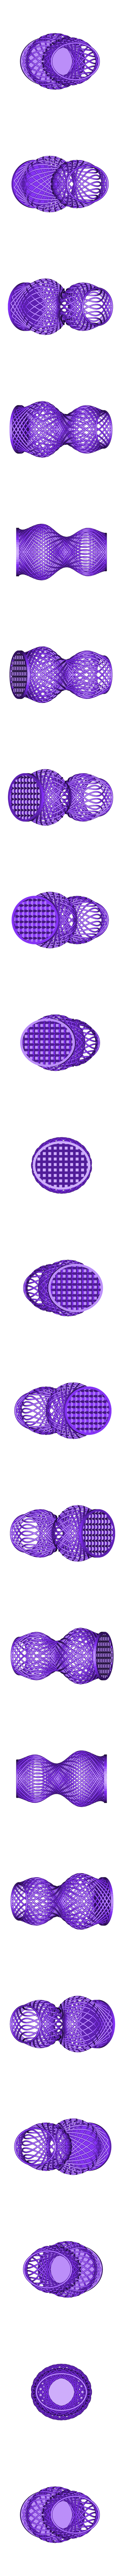 bw3.stl Download free STL file BasketWeave3 • 3D printer design, Birk